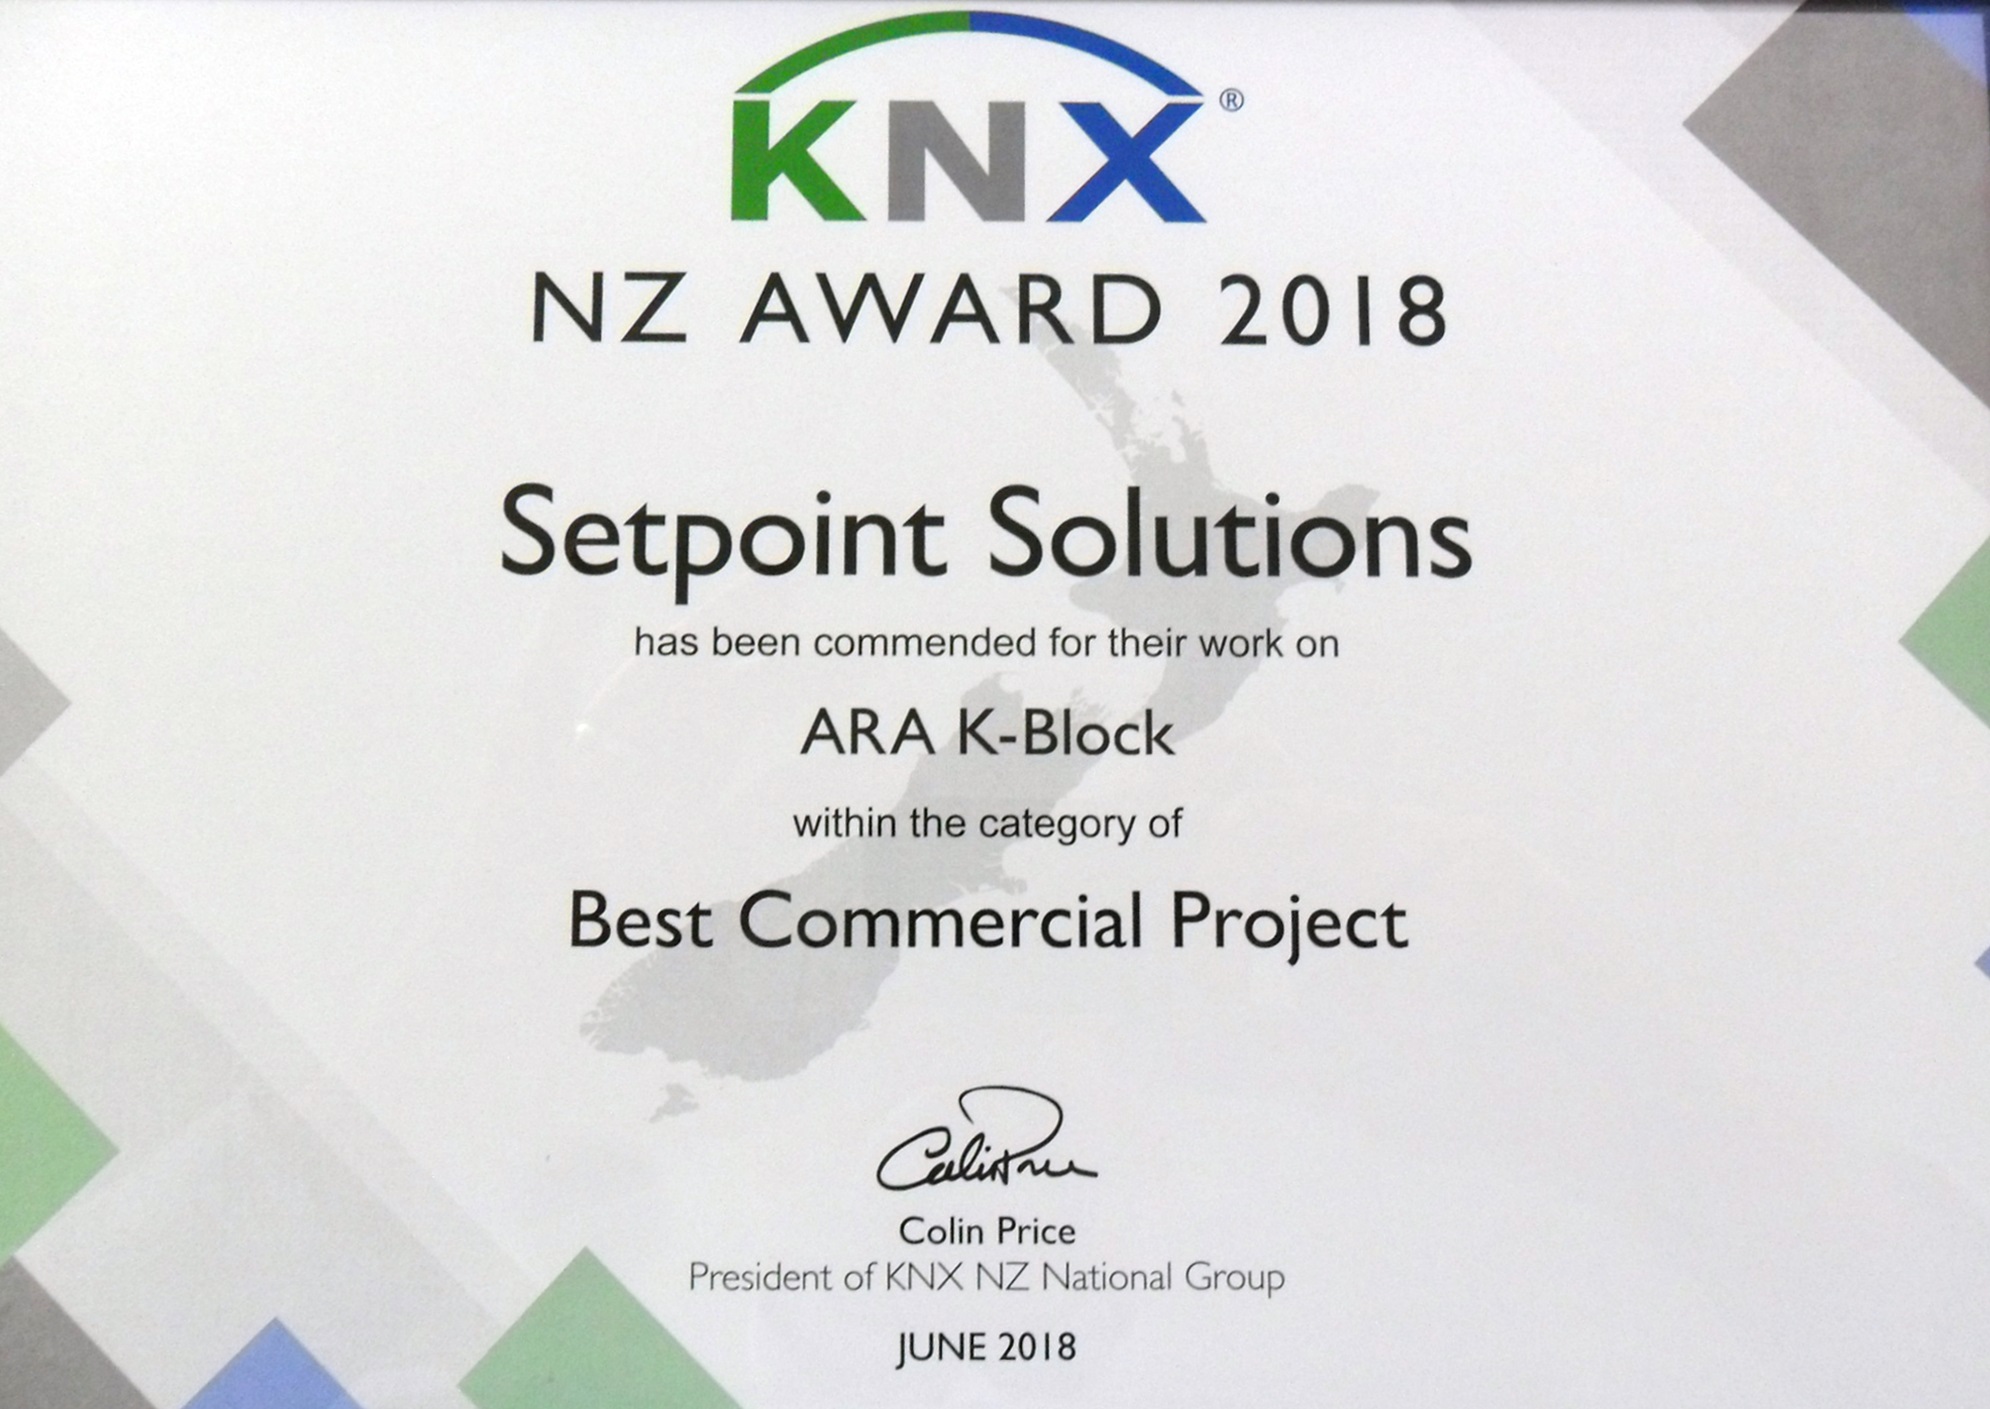 KNX Award commendation